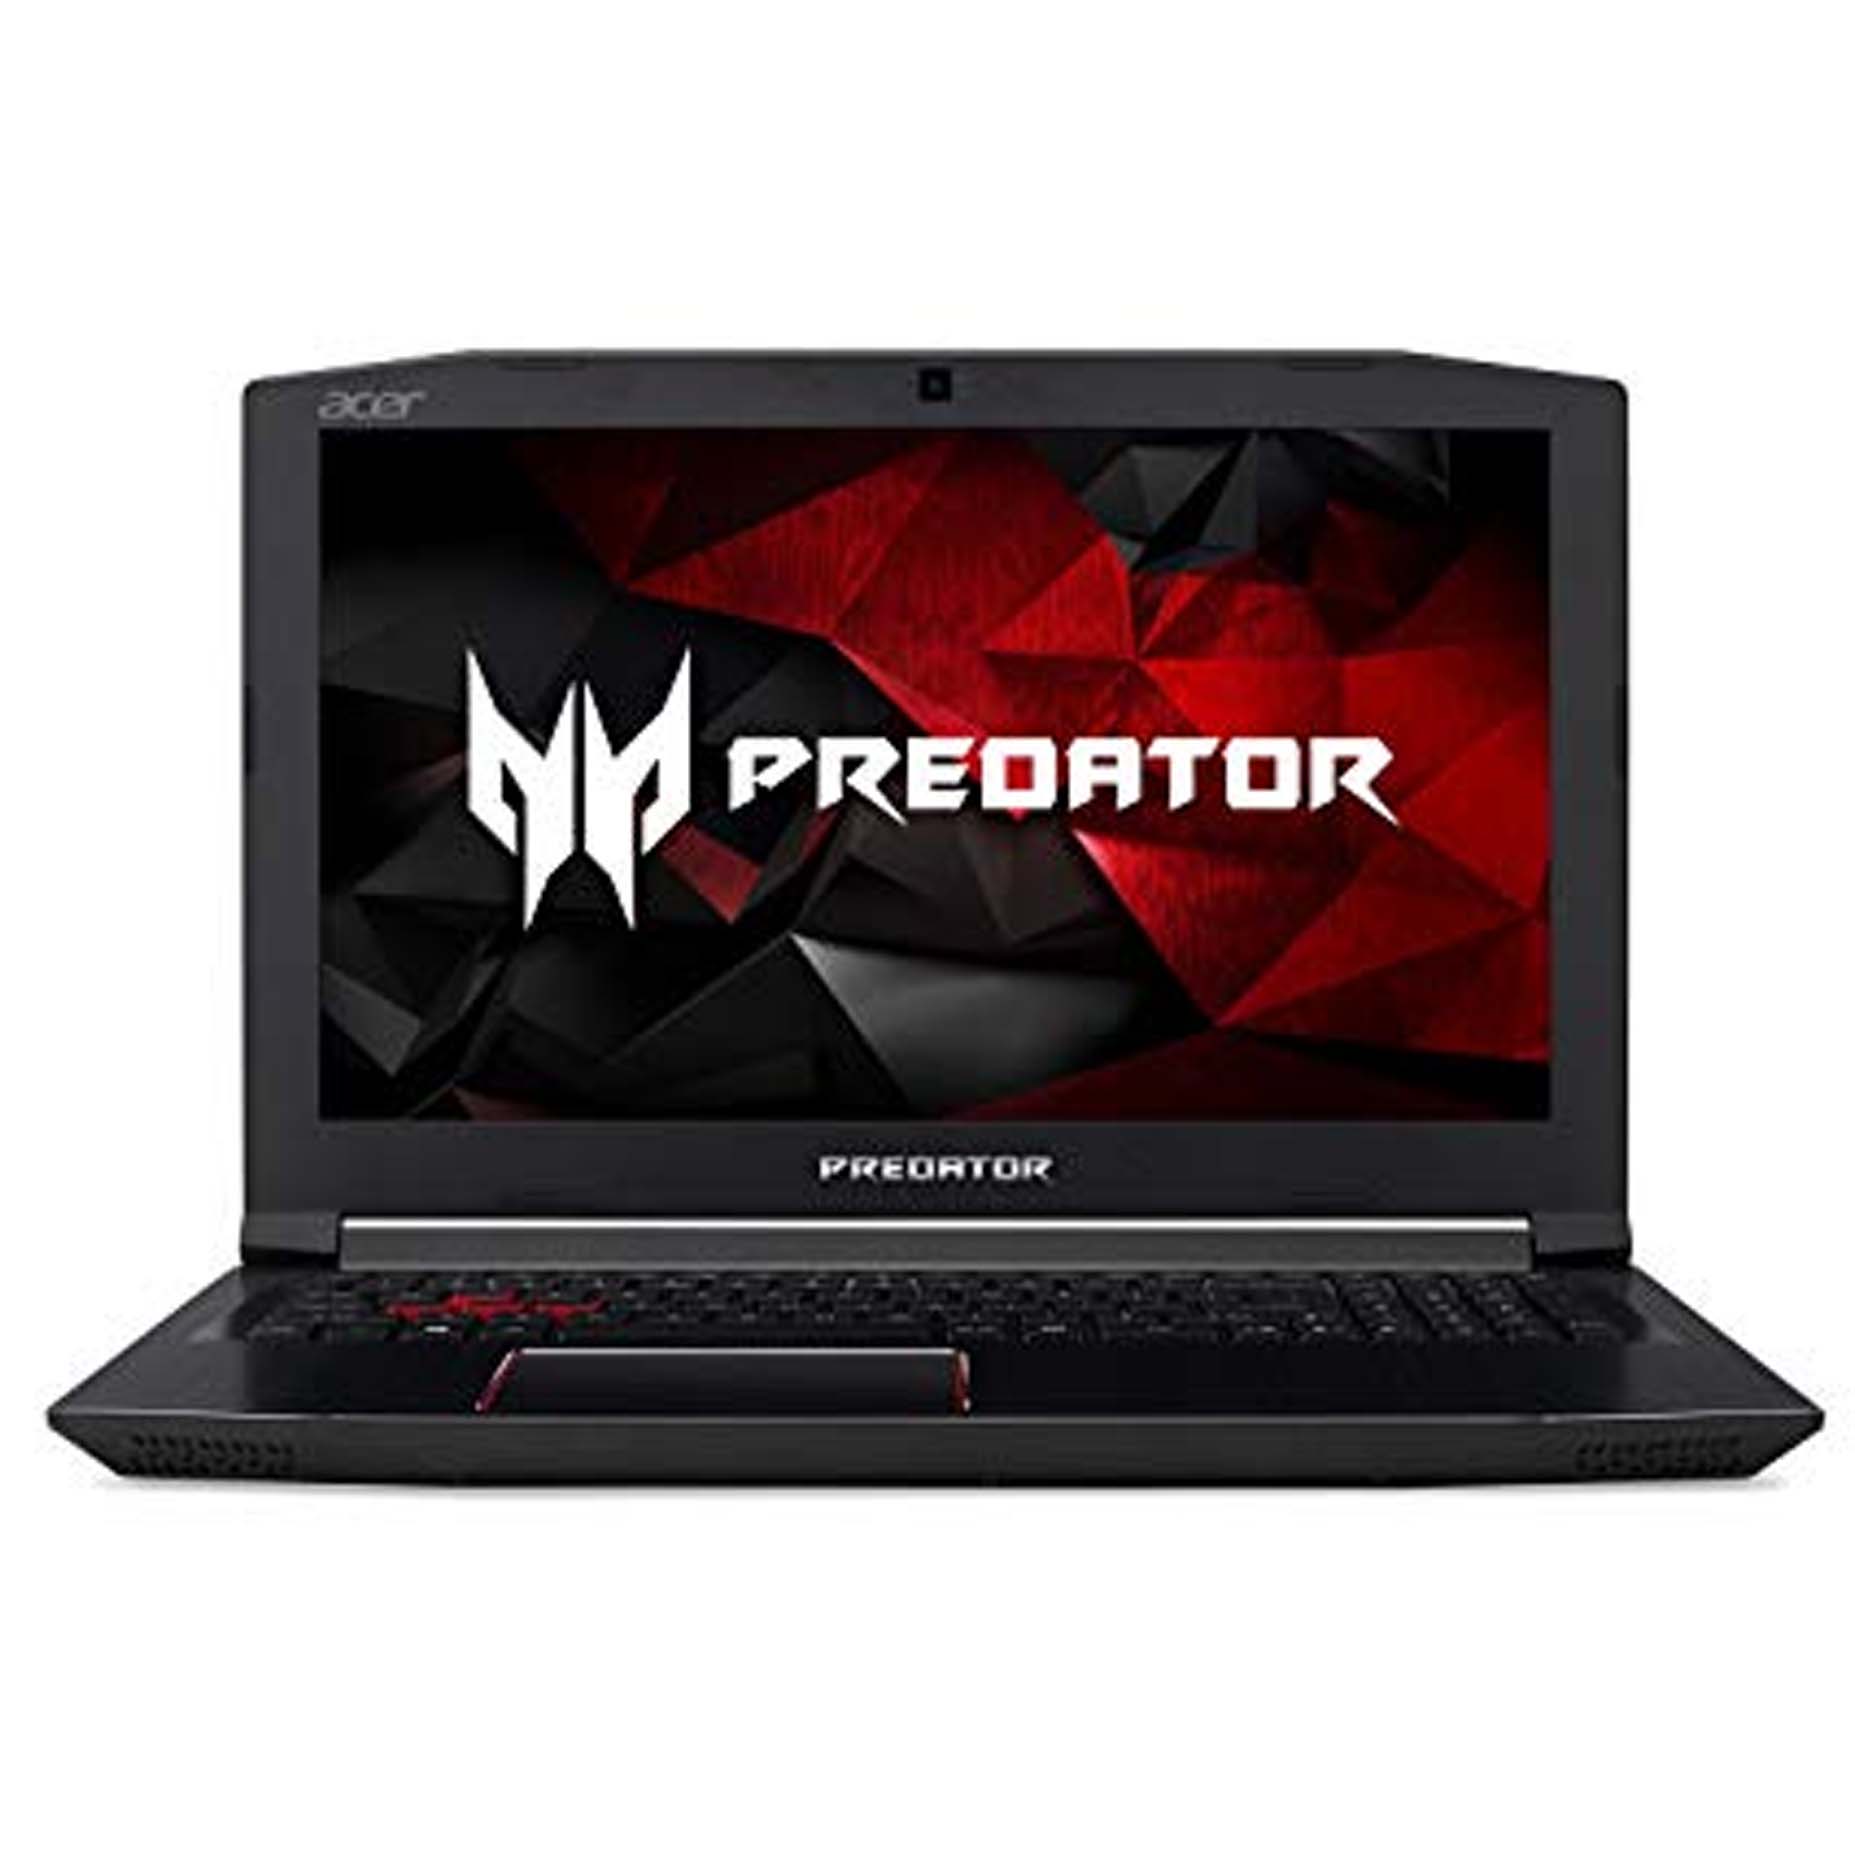 Harga Acer Predator 15 G3-572 i7-7700 16GB 128GB SSD + 1TB HDD 15.6-inch Win 10 Laptop Gaming